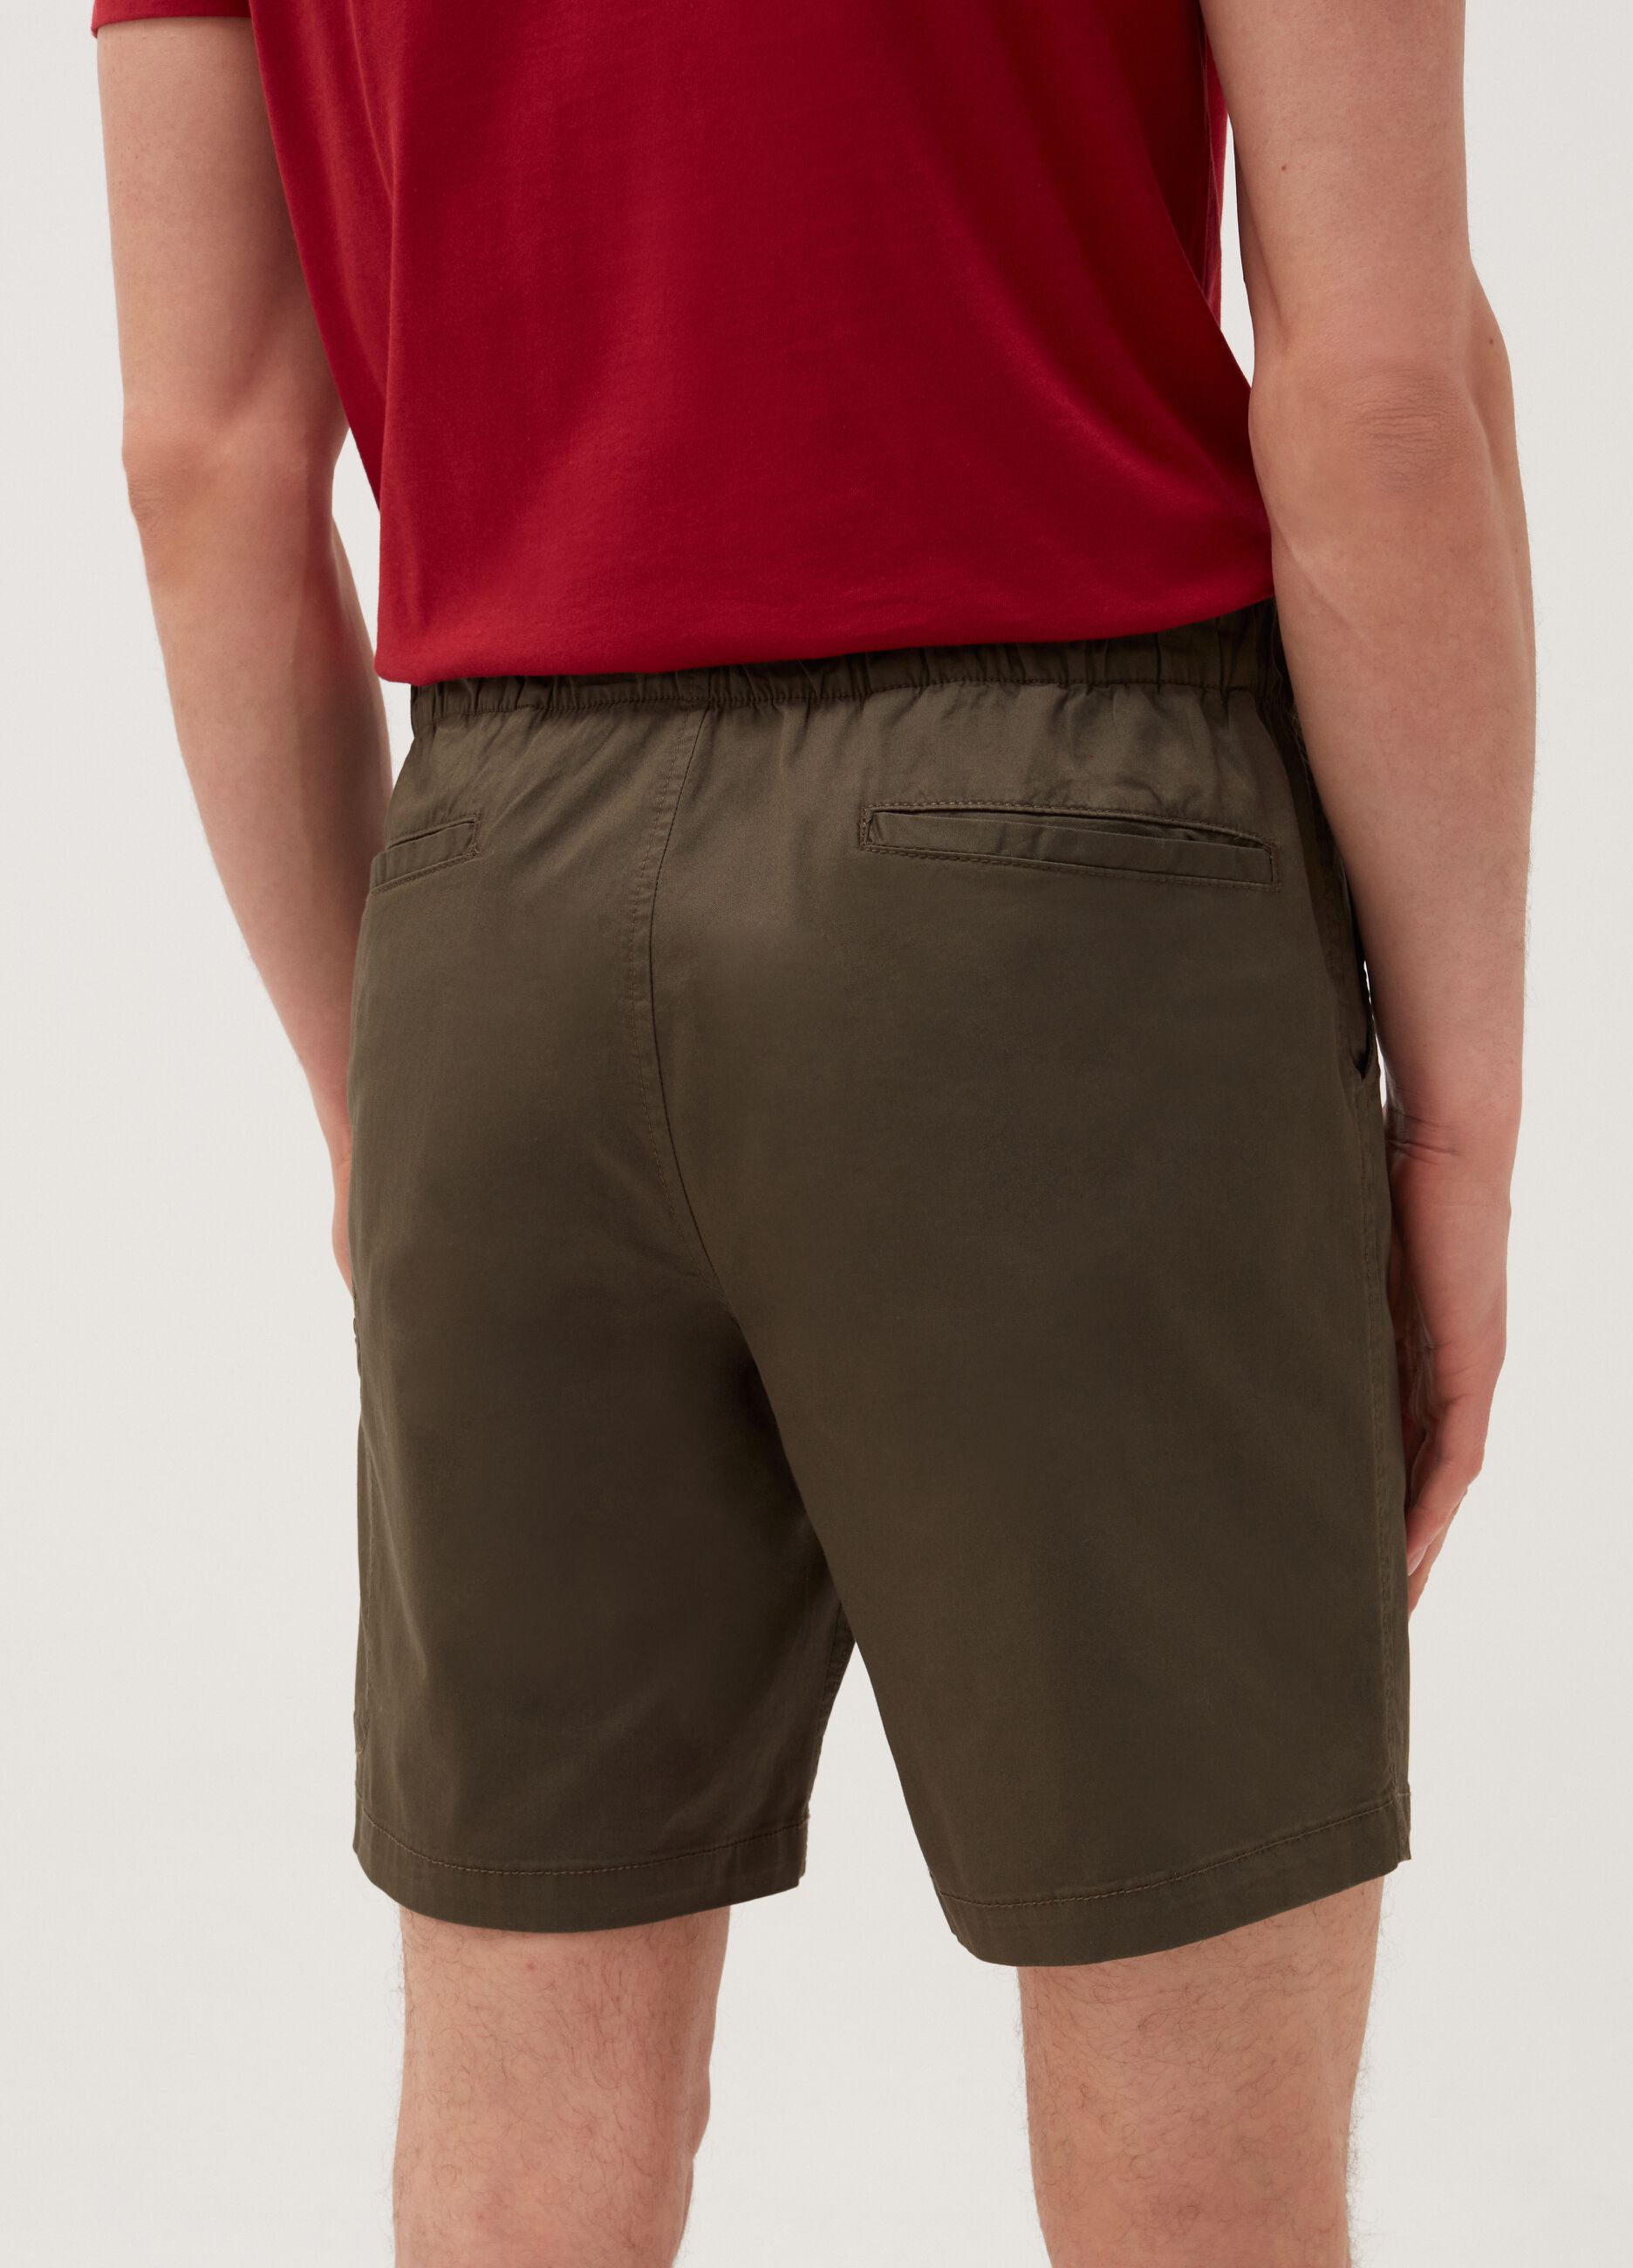 Bermuda cargo shorts with small belt